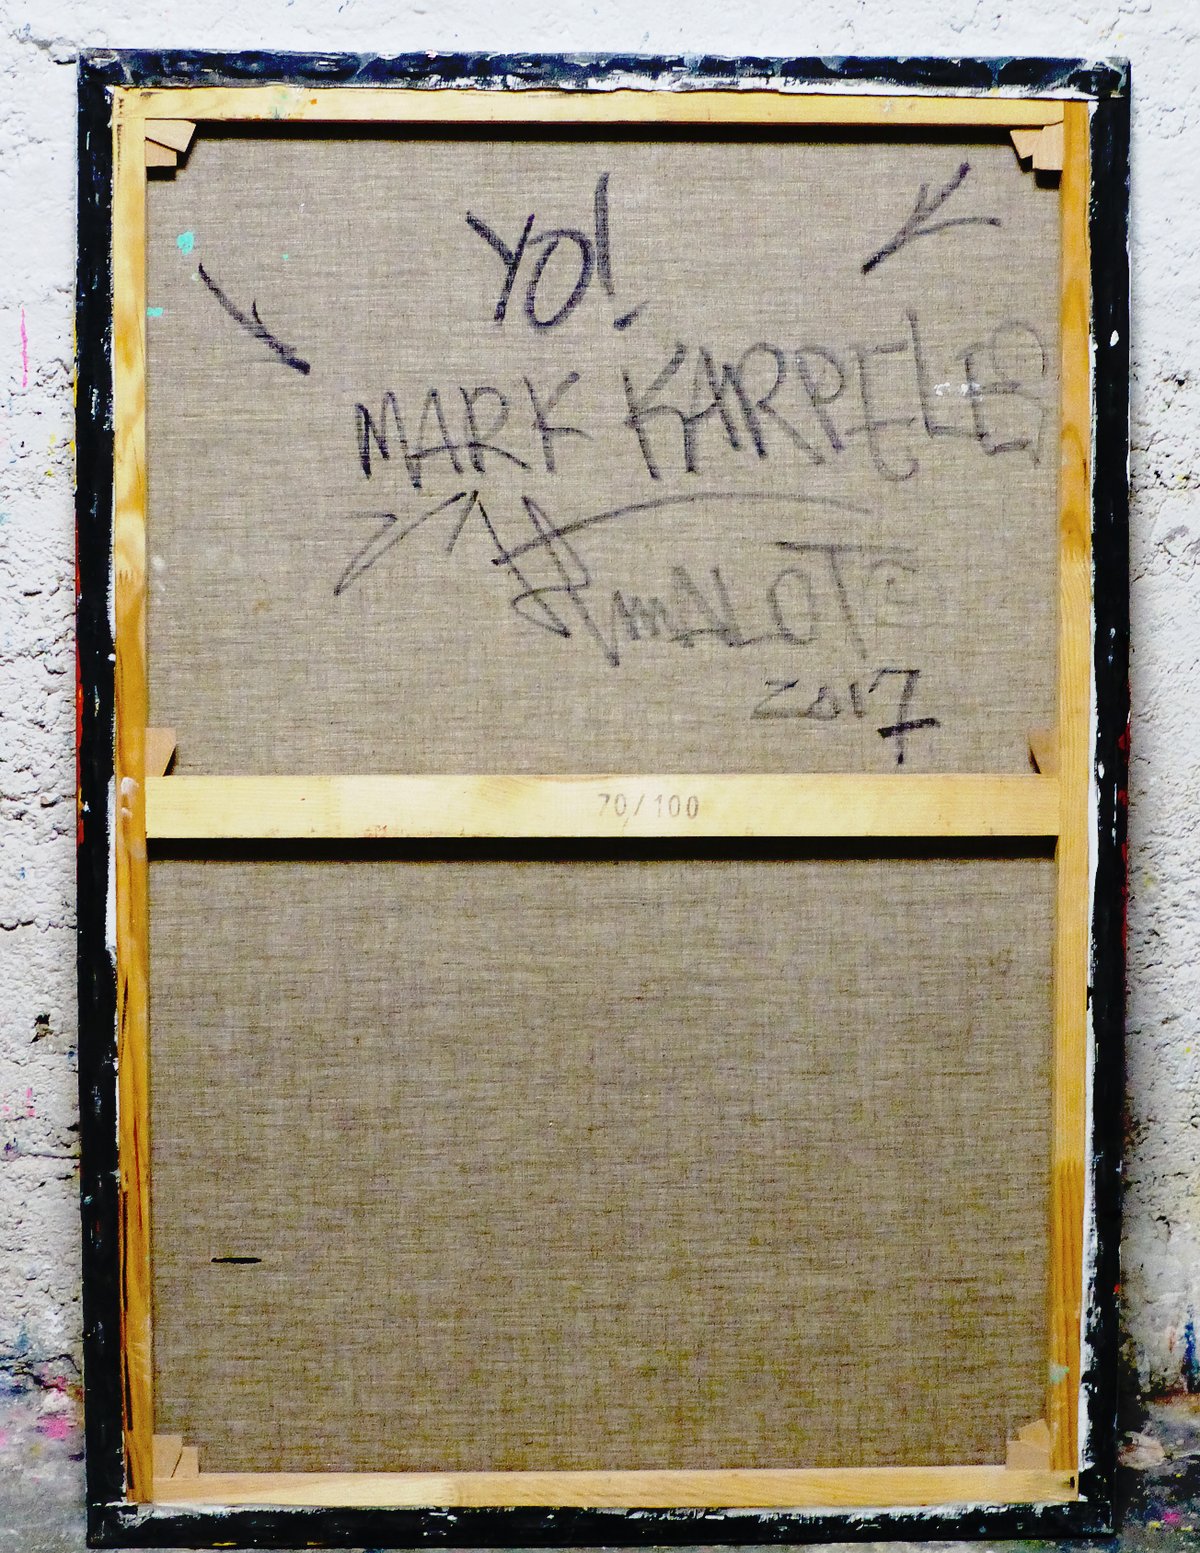 Image of 'YO!' MARK KARPELES! 'LE BARON DU BITCOIN' JPMalot 2017.